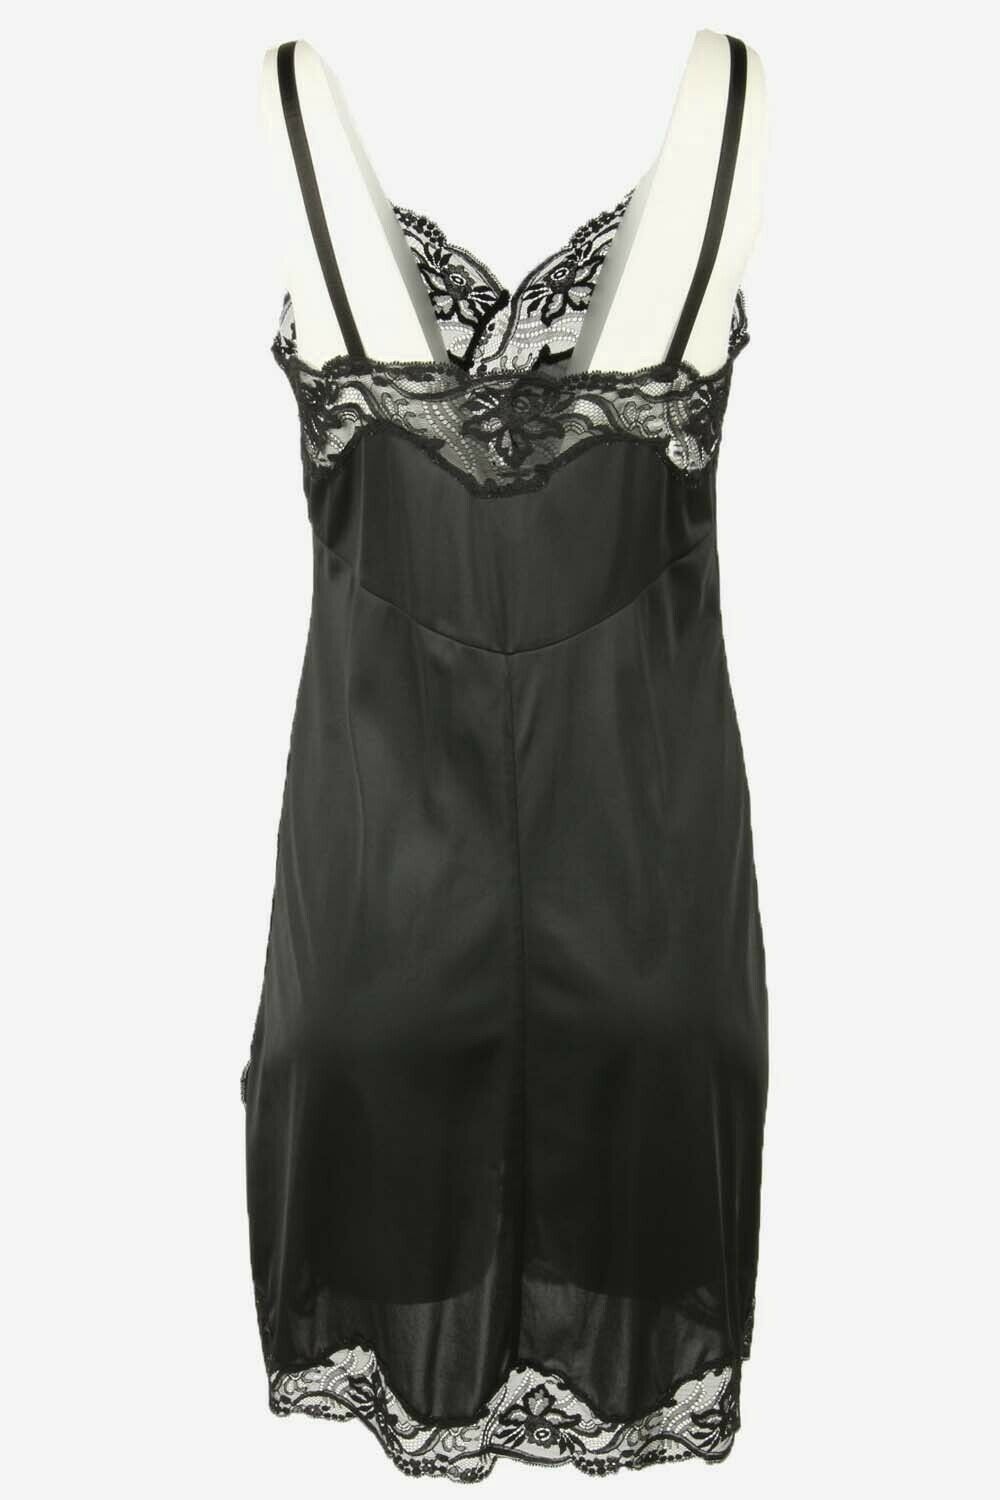 Vintage Spaghetti Strap Slip Dress Chemise Lace Nightdress 90s Black S ...